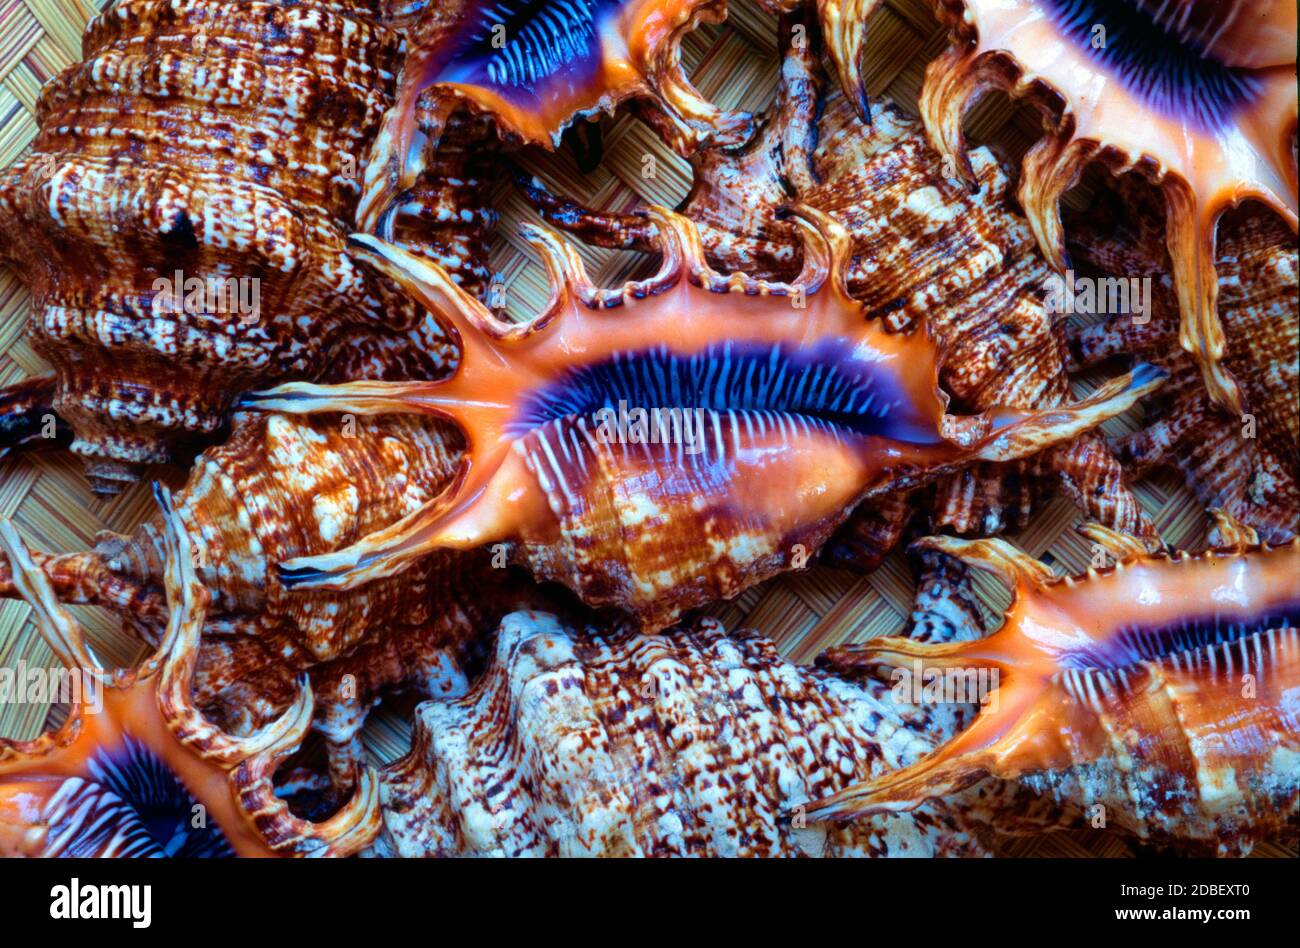 Display of Arthritic Spider Conch or Arthritic Spider Conches Seashells or Sea Shells, Lambis chiragra arthritica aka Harpago arthriticus, Strombus divergens or Strombus nigricans Stock Photo